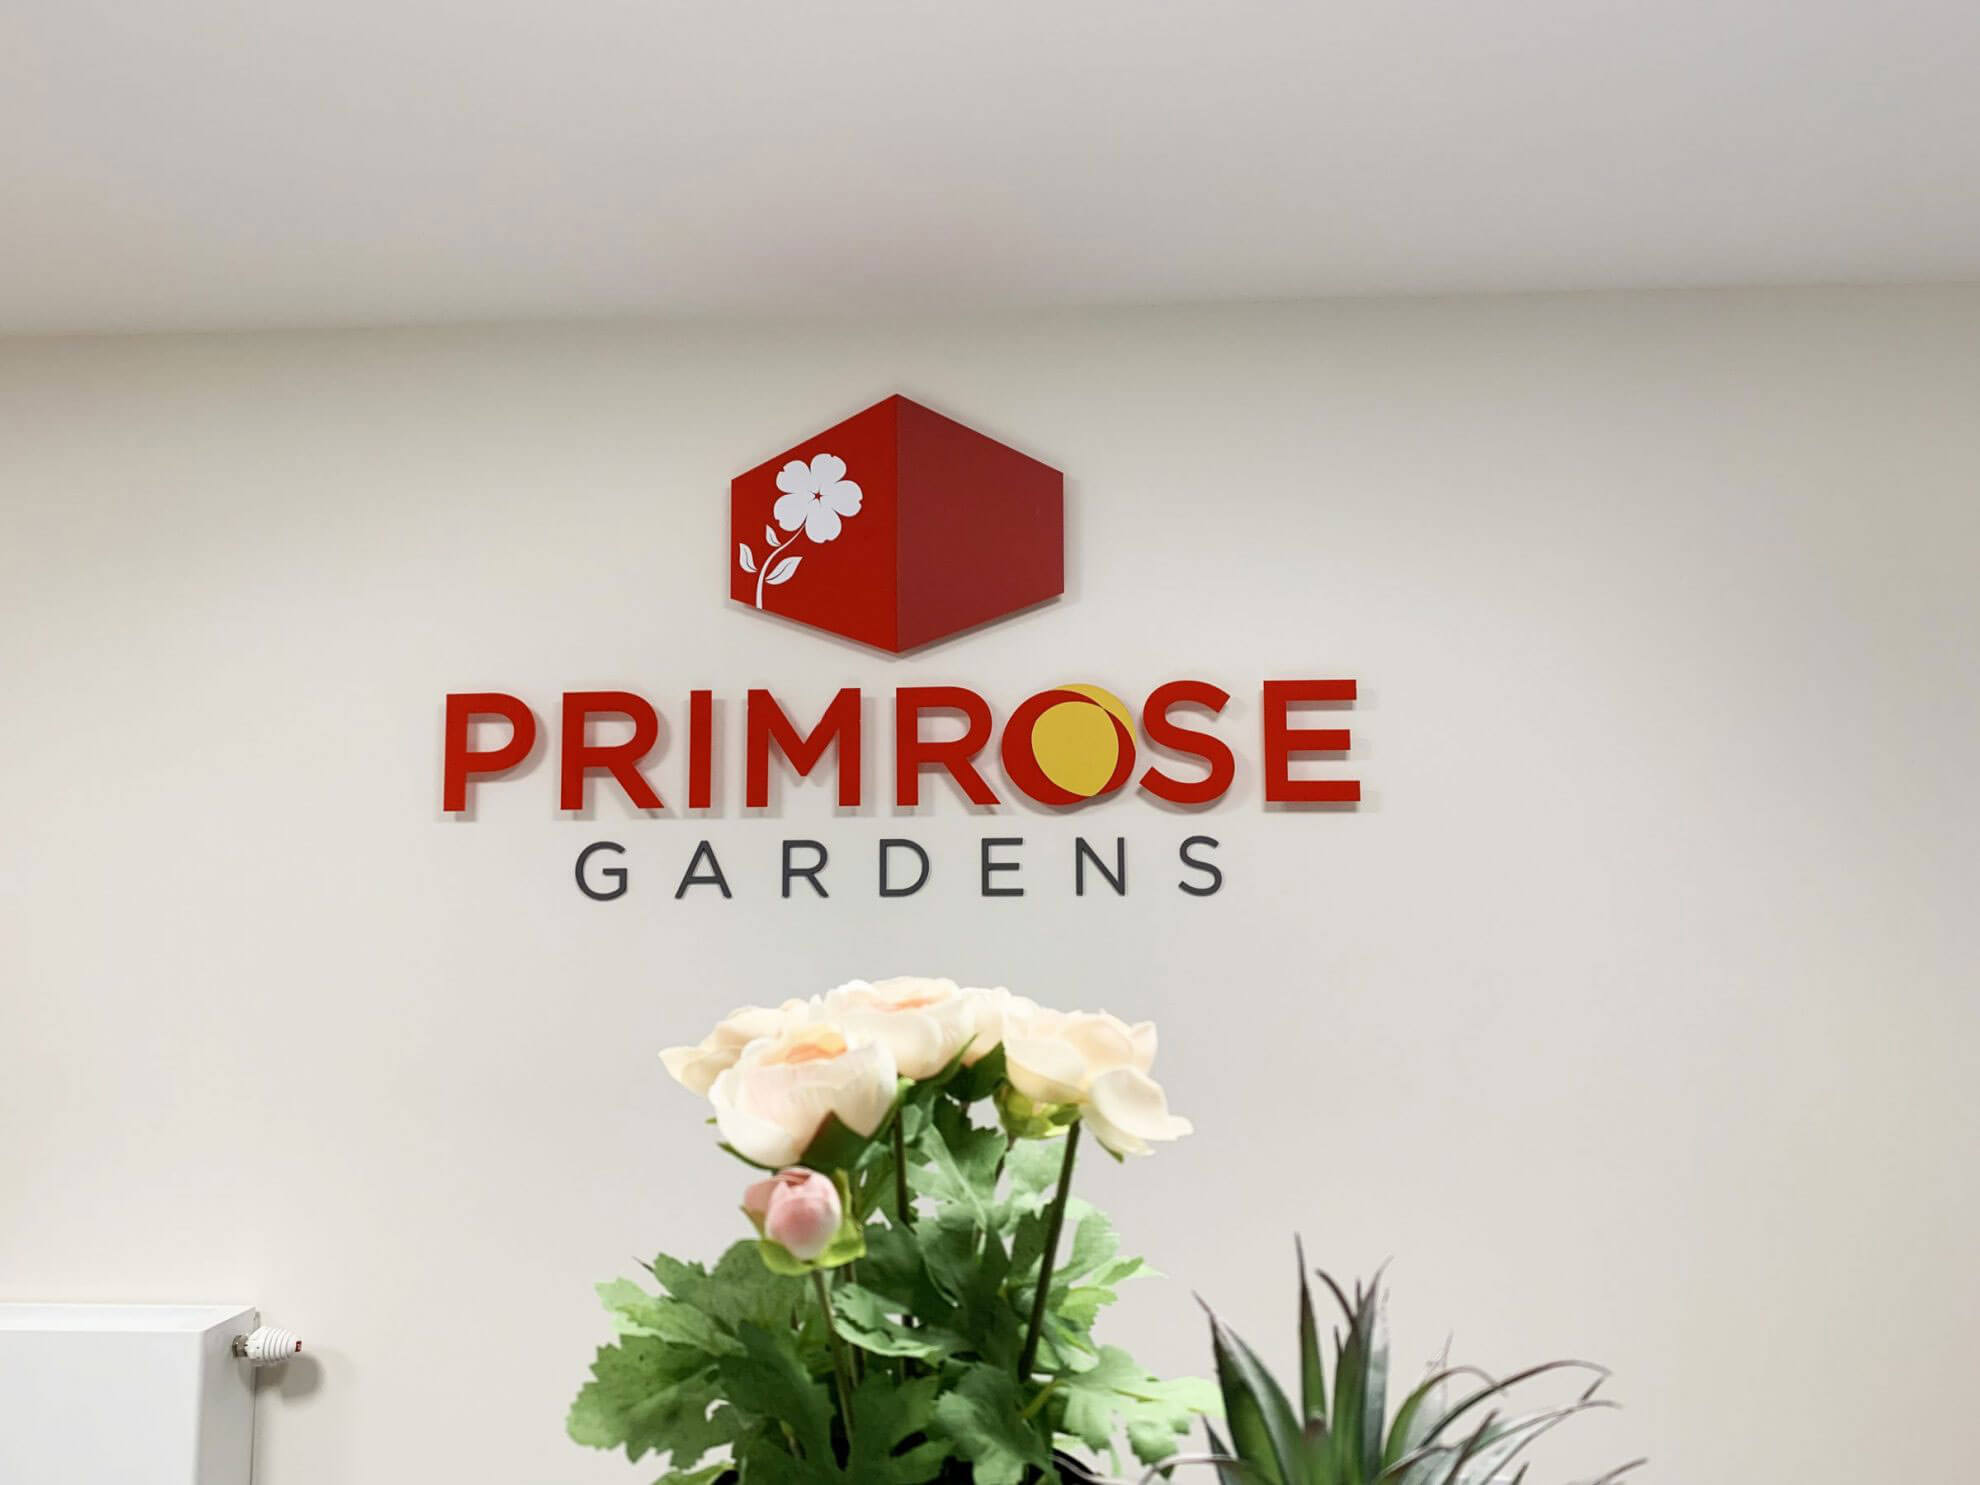 Primrose Gardens reception signage